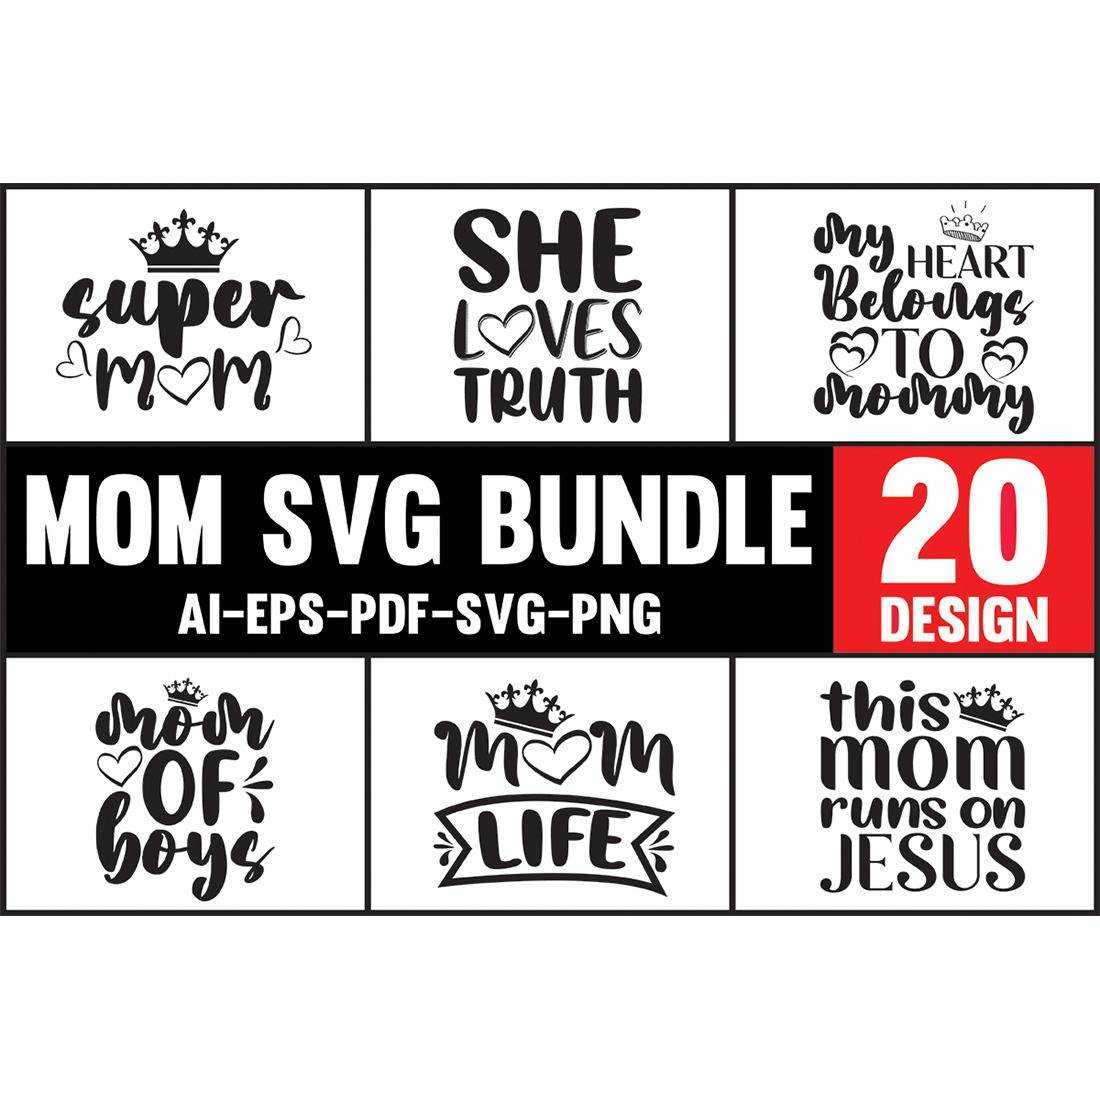 Mom SVG Design Bundle main cover